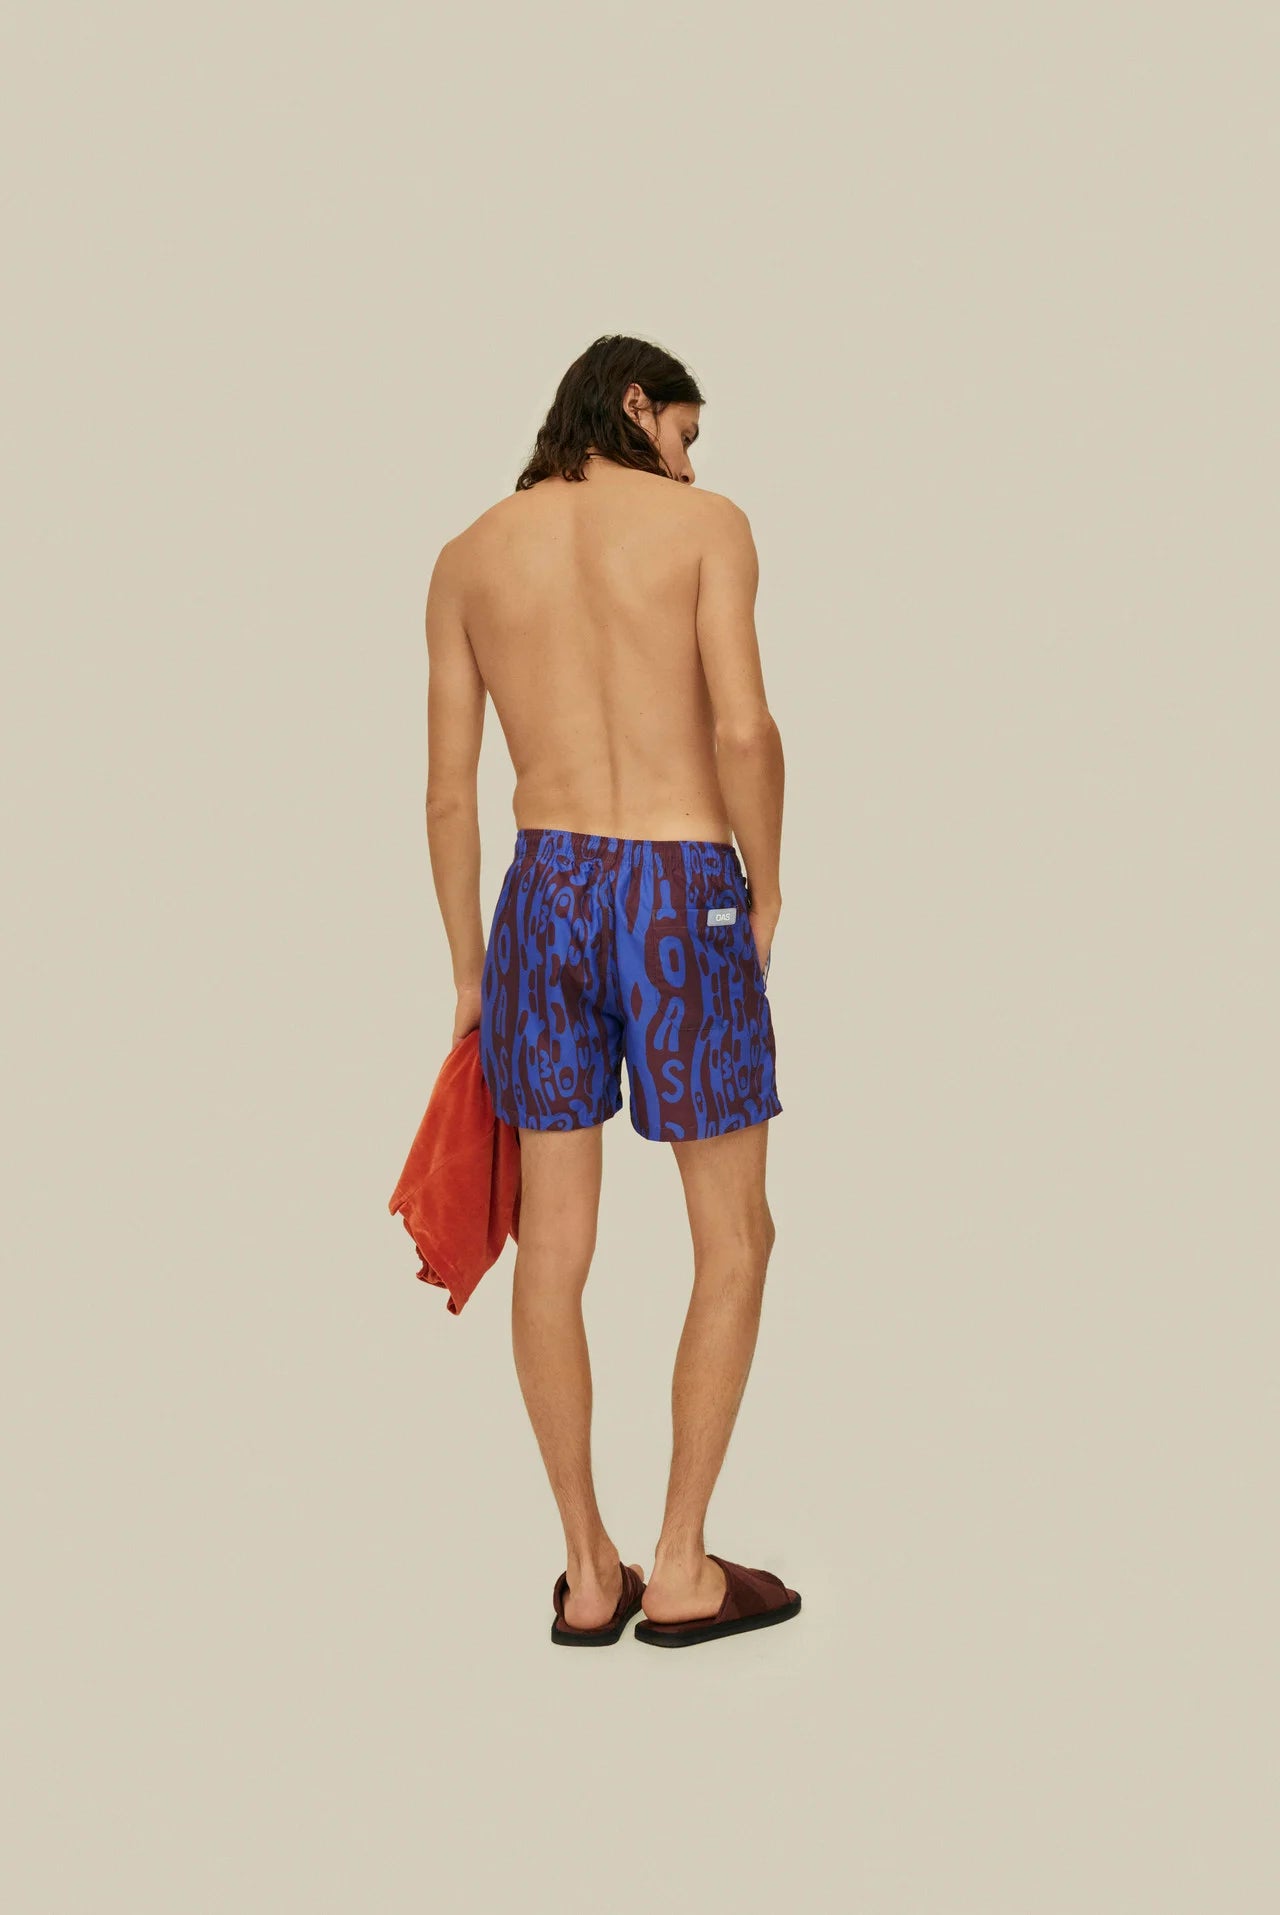 OAS Thenards Jiggle Swim Shorts on model. Model is wearing swim shorts carrying orange terry shirt. Taken from back.